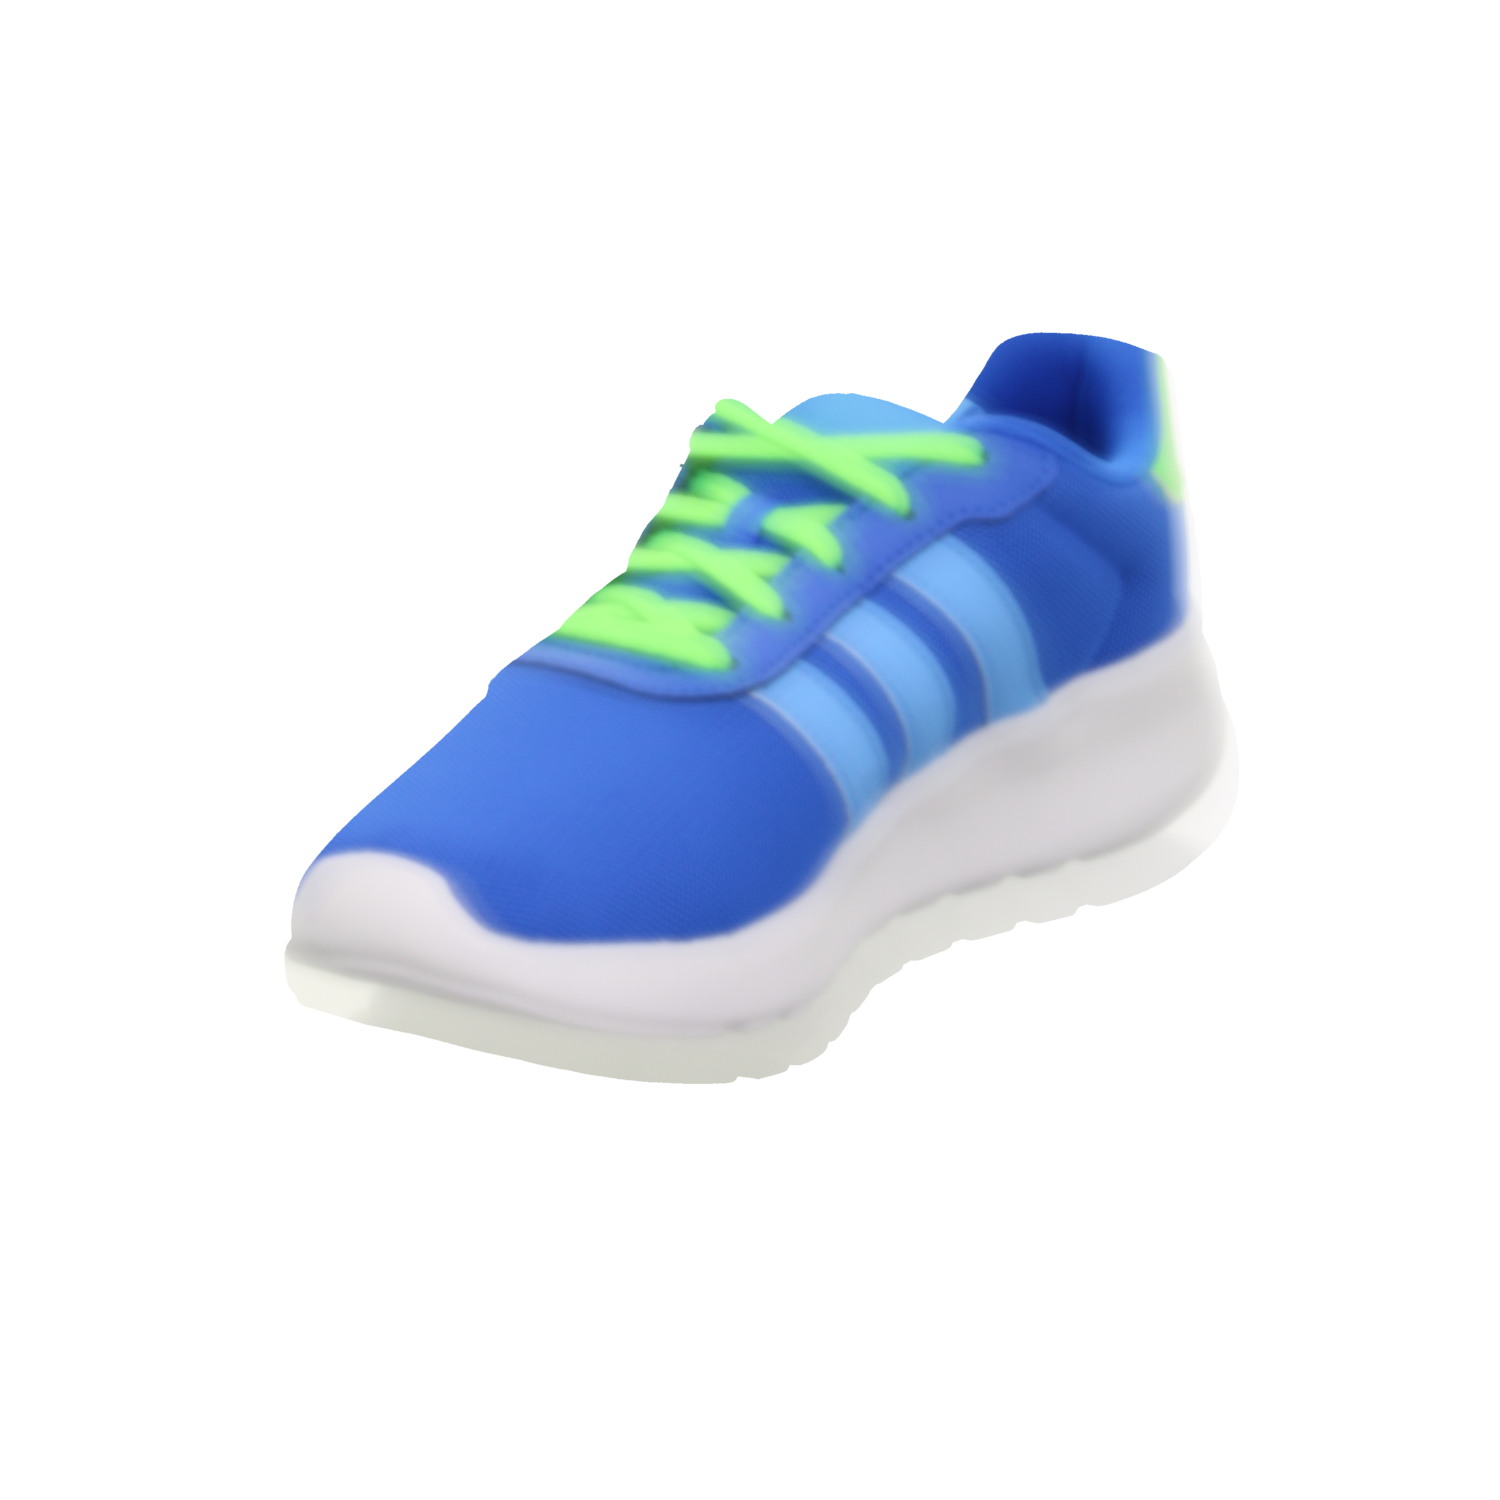 Adidas Sneaker K denim / hell-blau